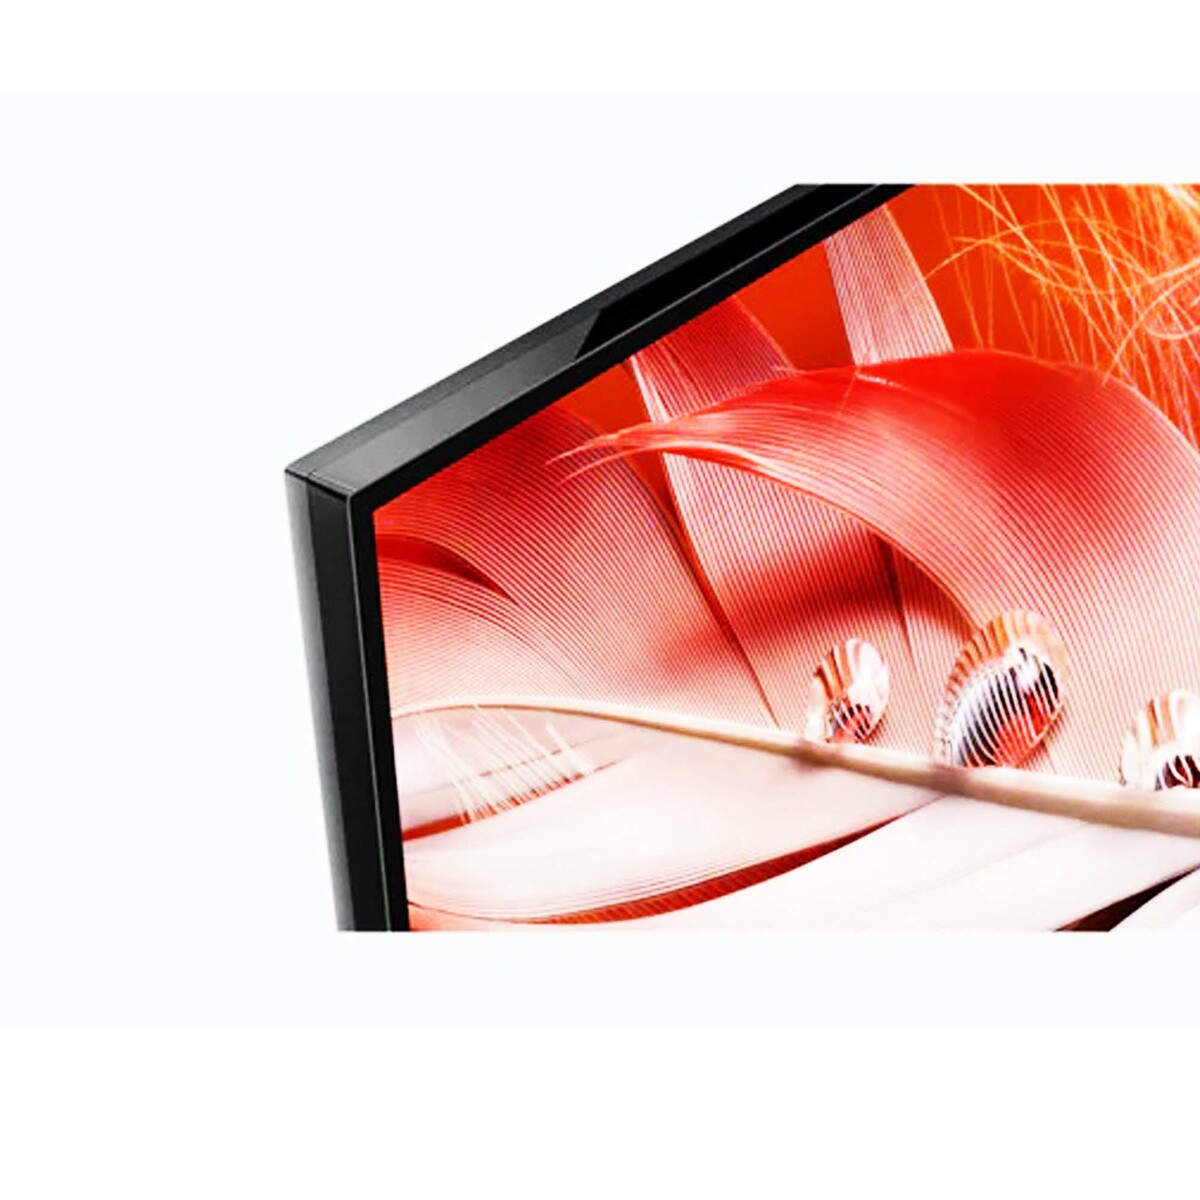 Sony 4K Ultra HD  Google Smart LED TV XR-55X90J 55inch